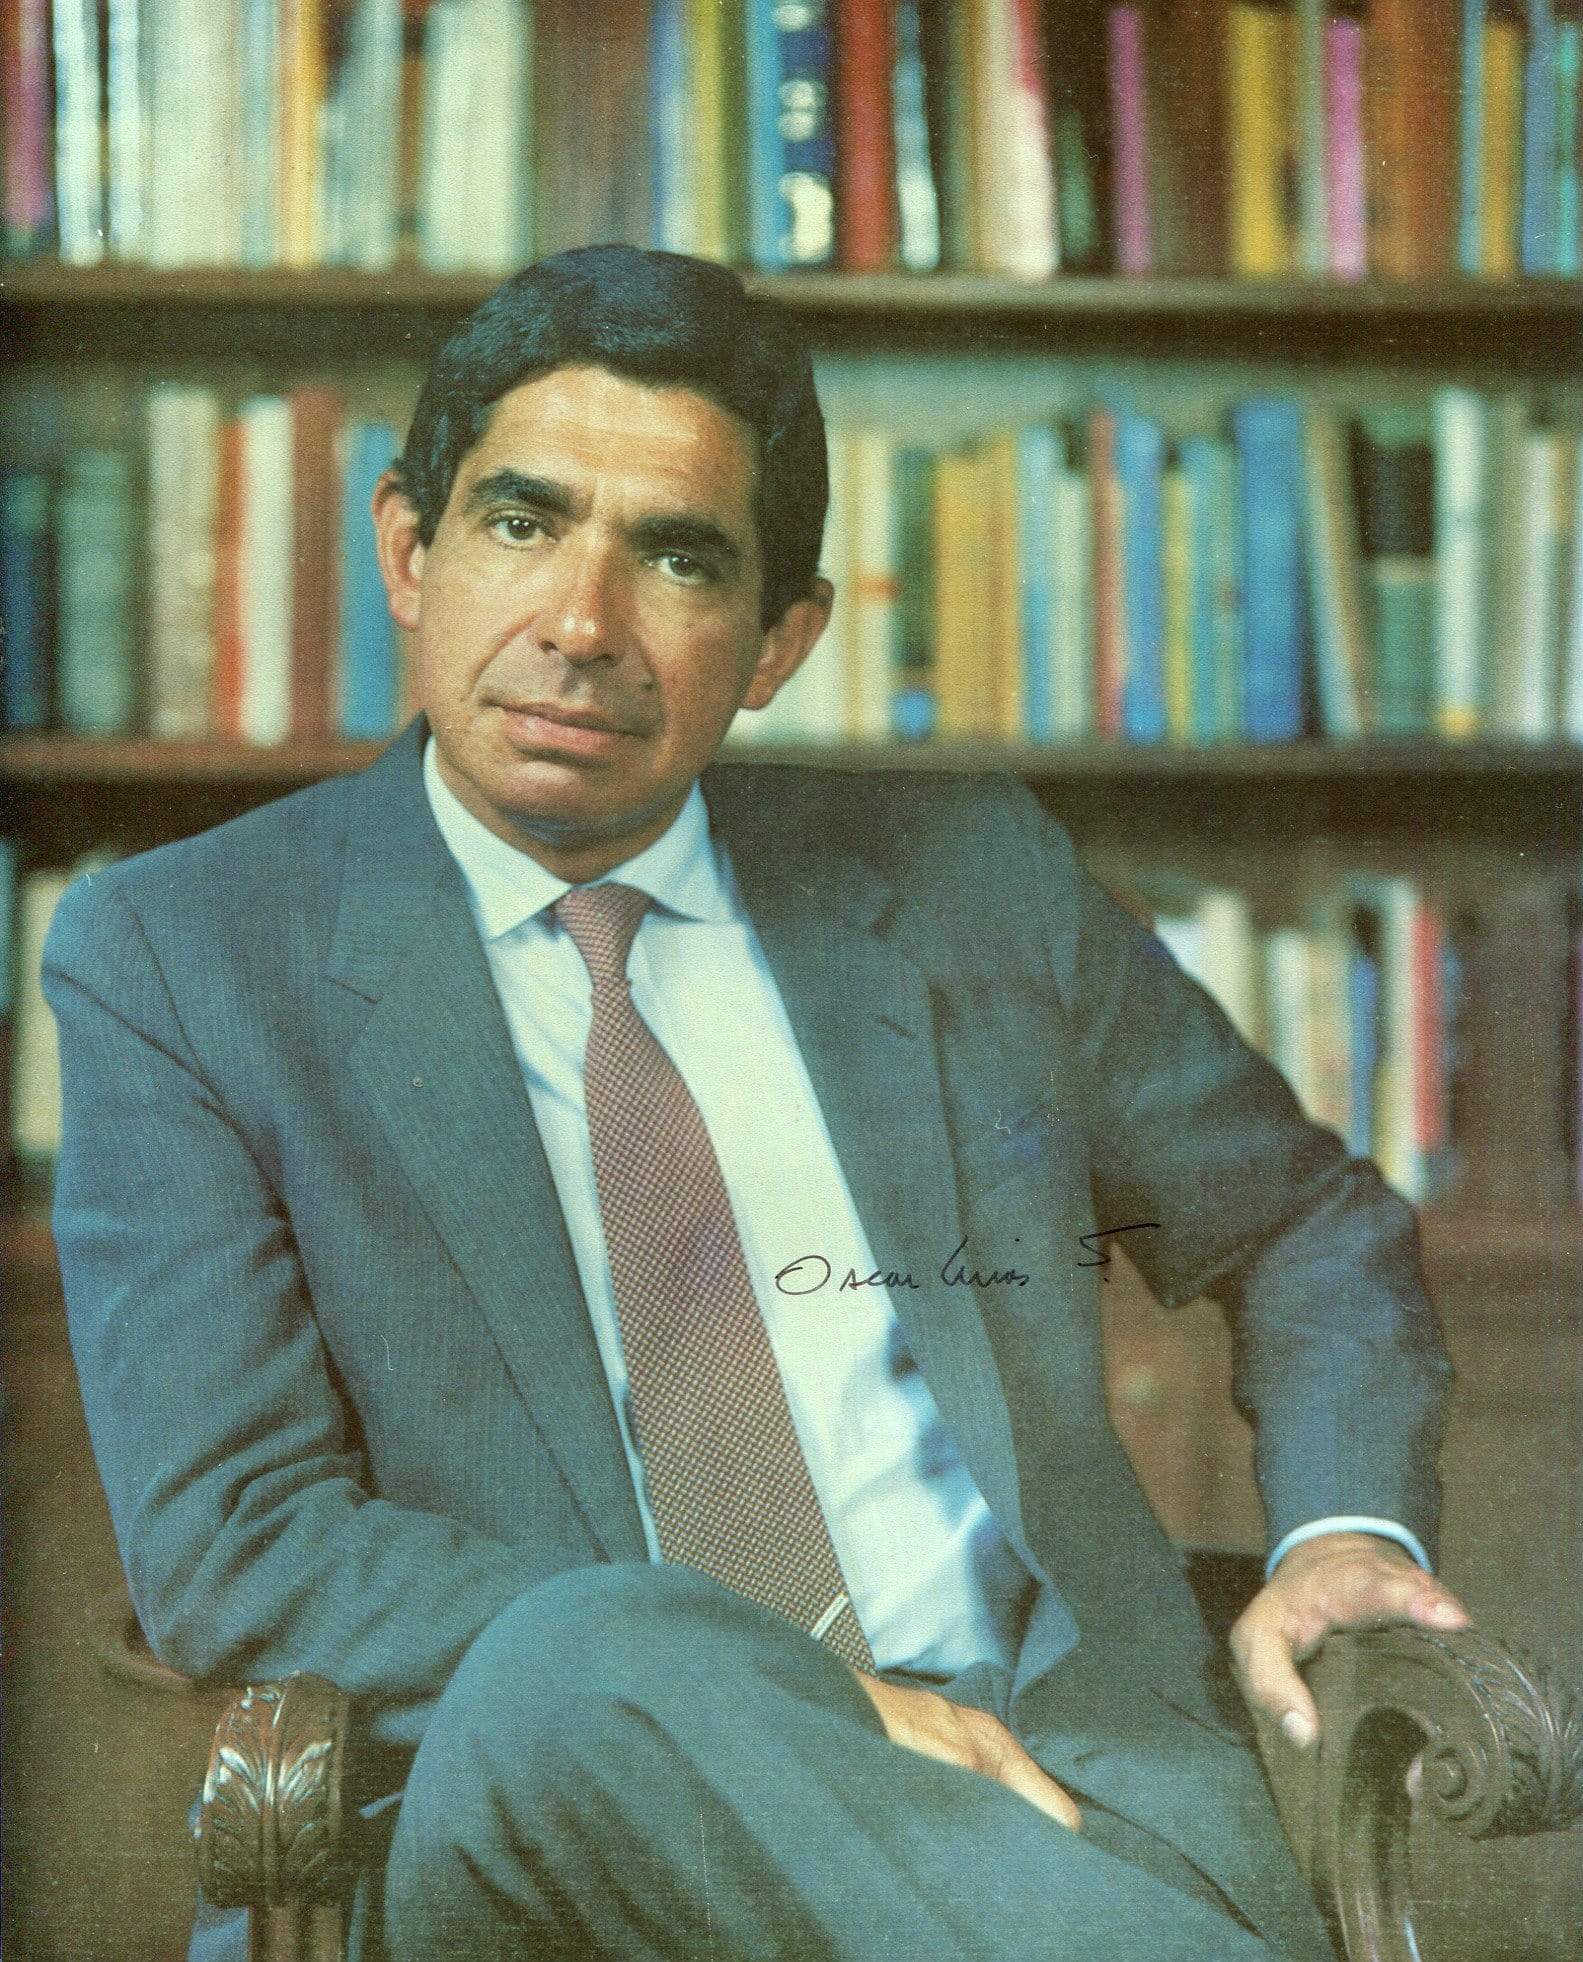 Oscar Arias Sánchez Autograph Autogramm | ID 7202925019285